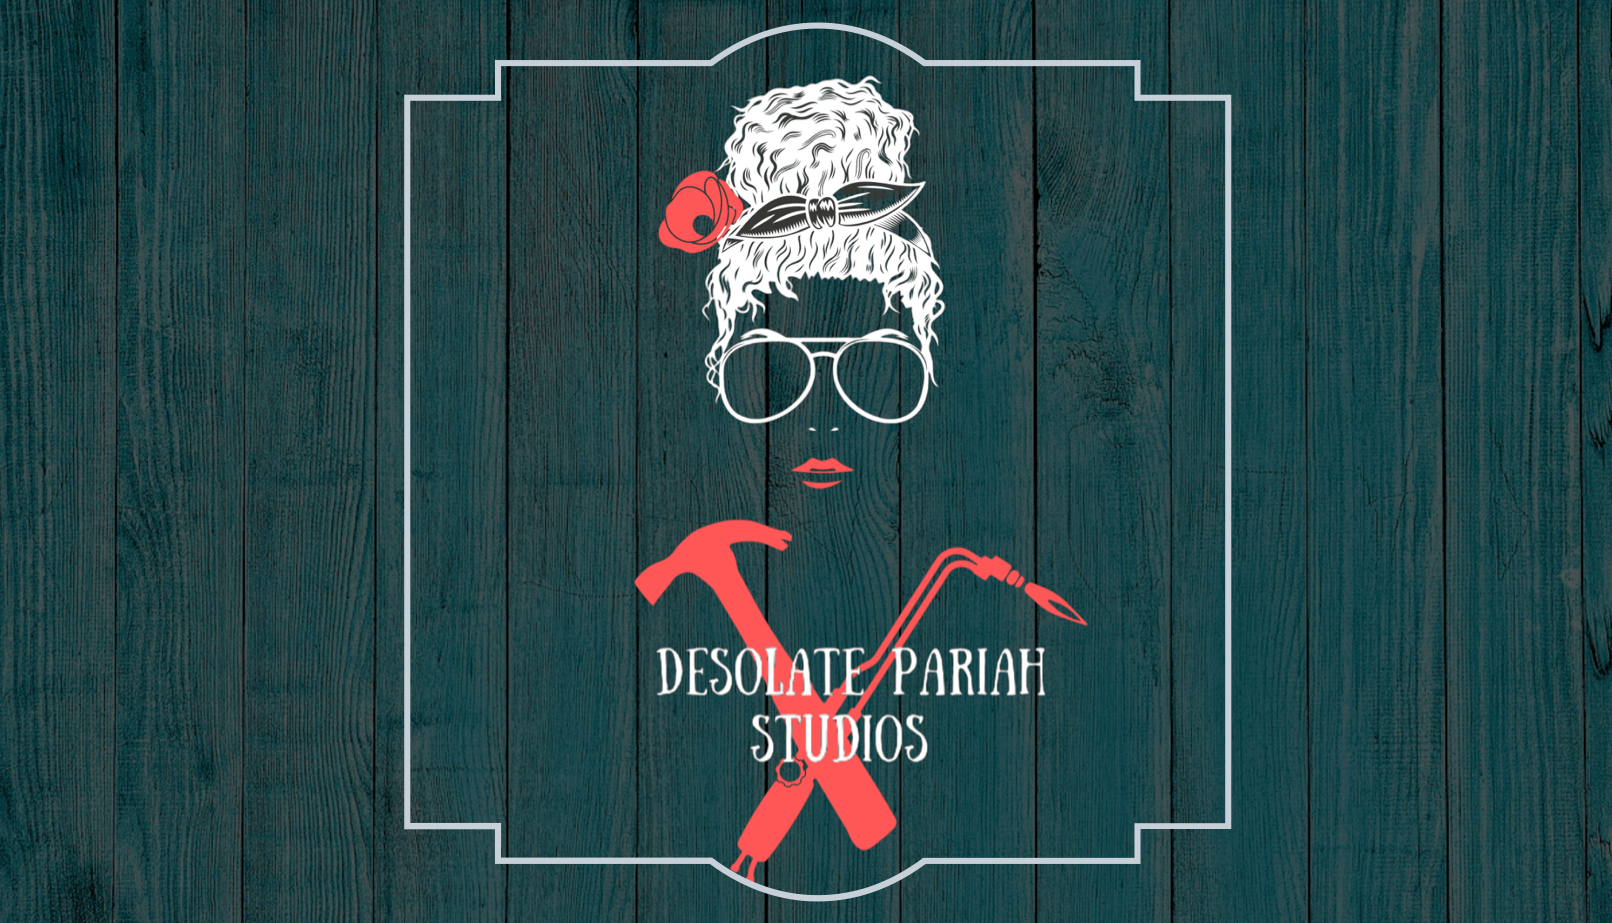 Desolate Pariah Studios